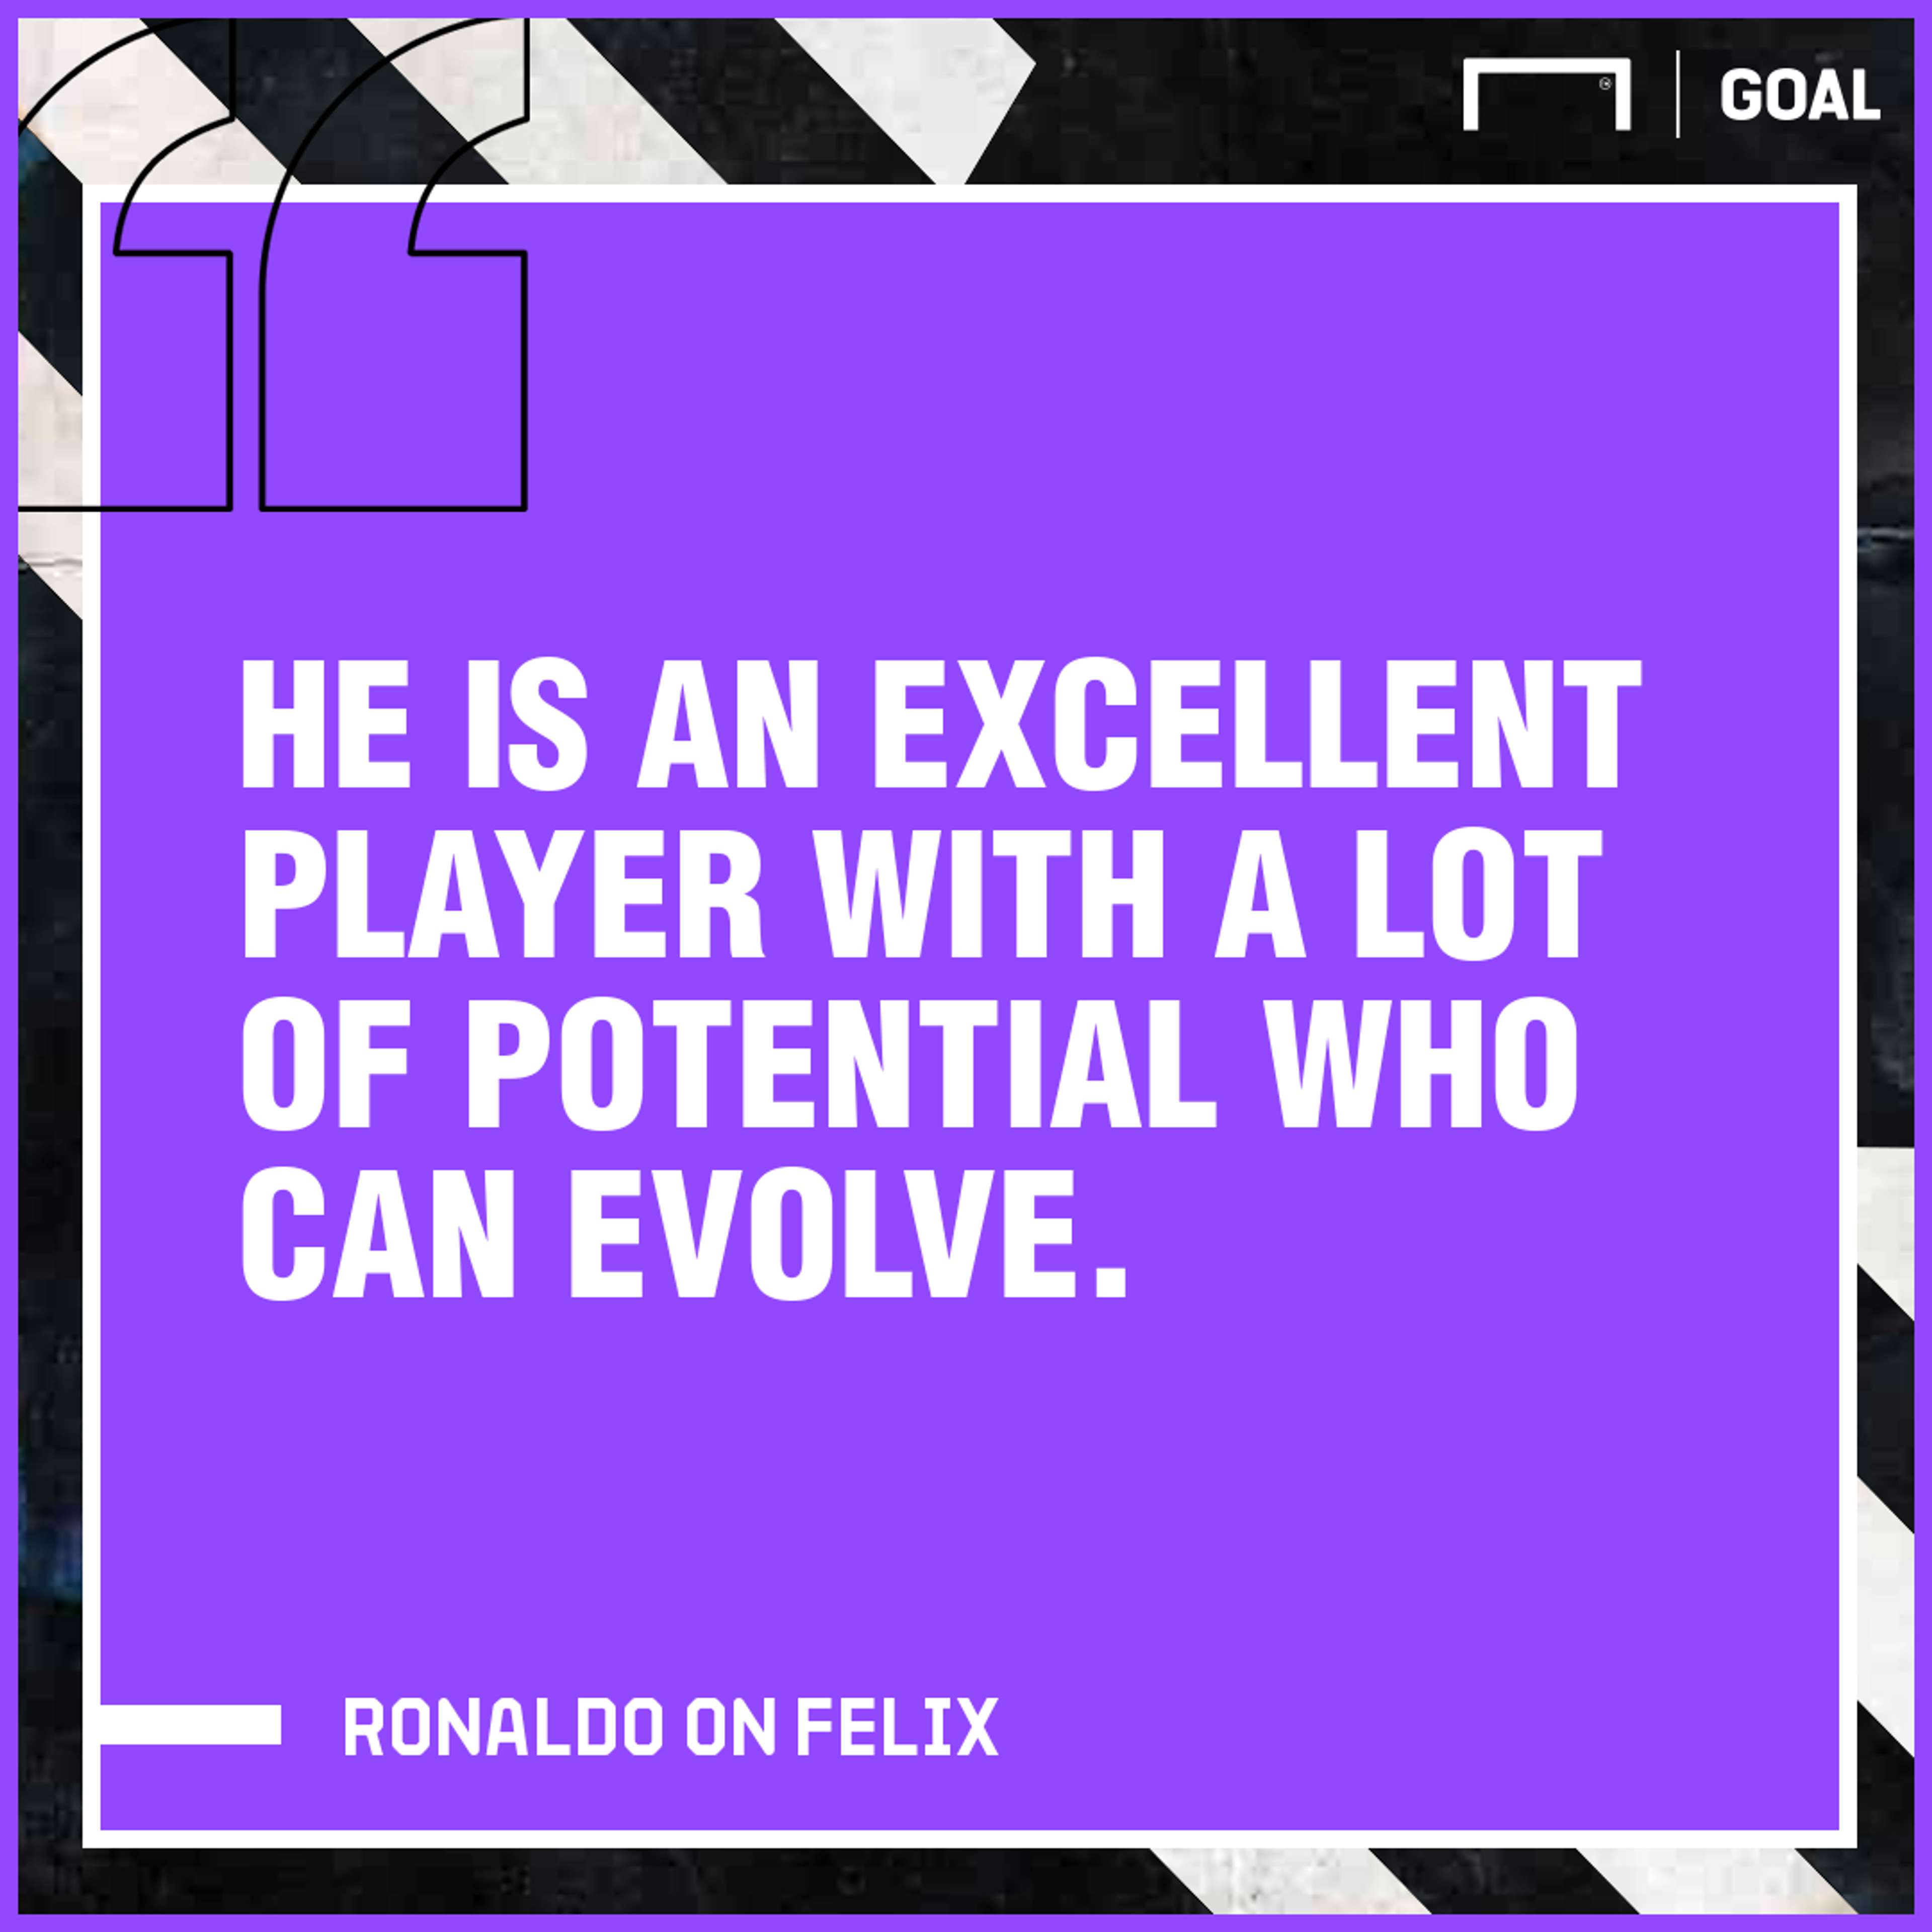 Ronaldo on Felix